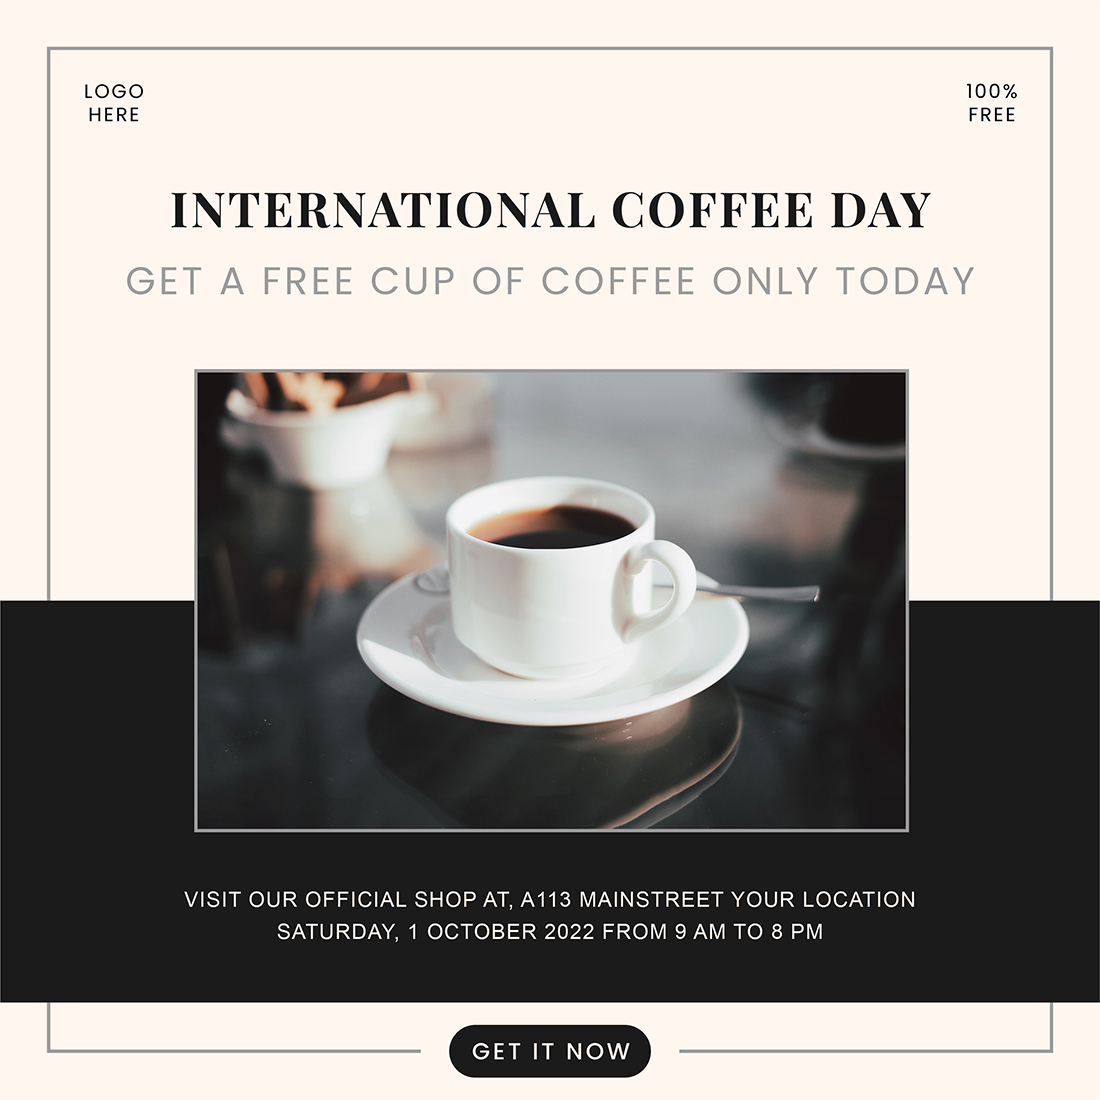 International Coffee Day Social Media Post Templates facebook image.